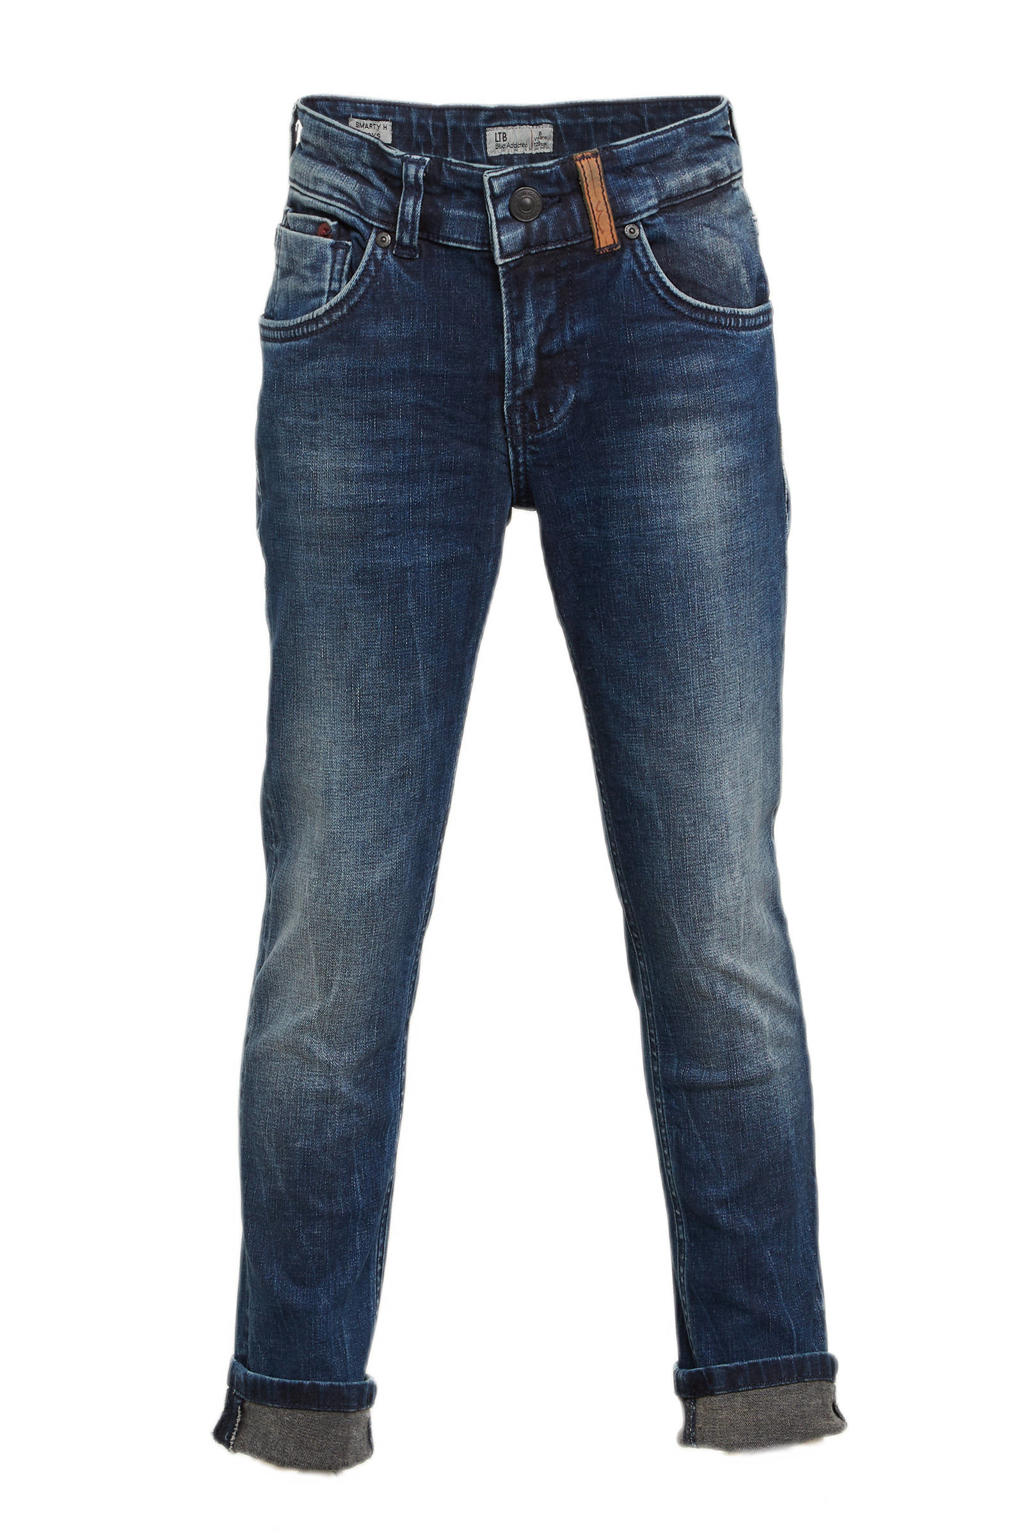 Donkerblauwe jongens LTB slim fit jeans Smarty van stretchdenim met regular waist